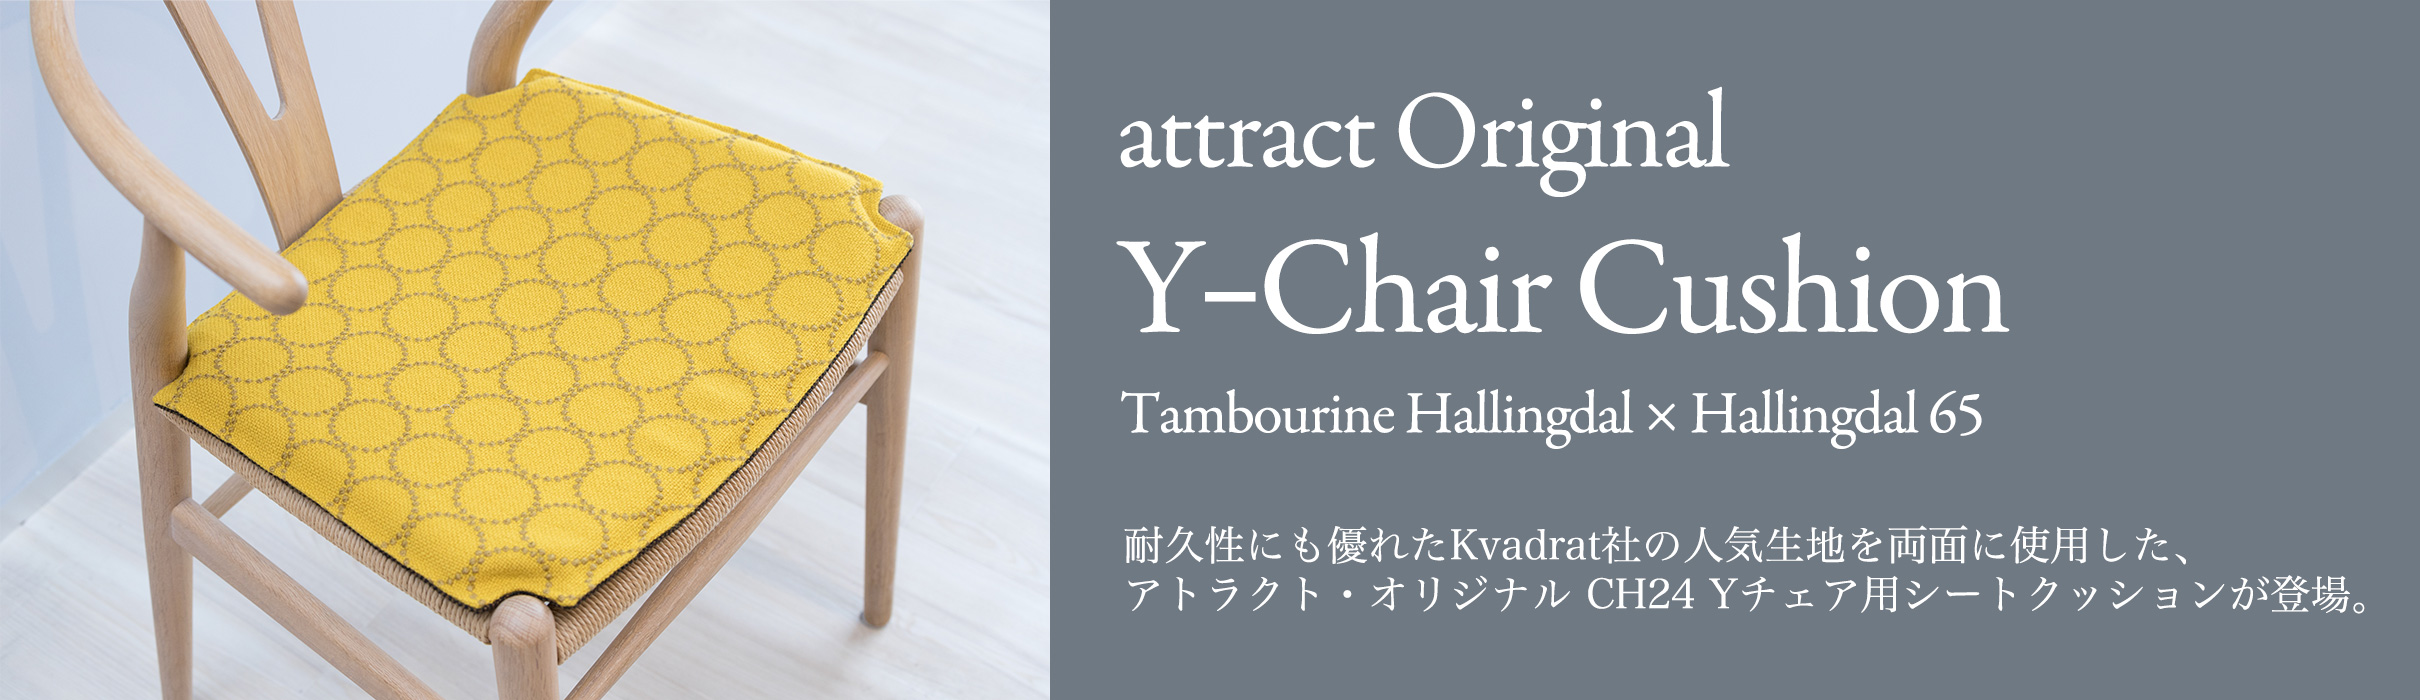 attract Original Y-Chair Cushion